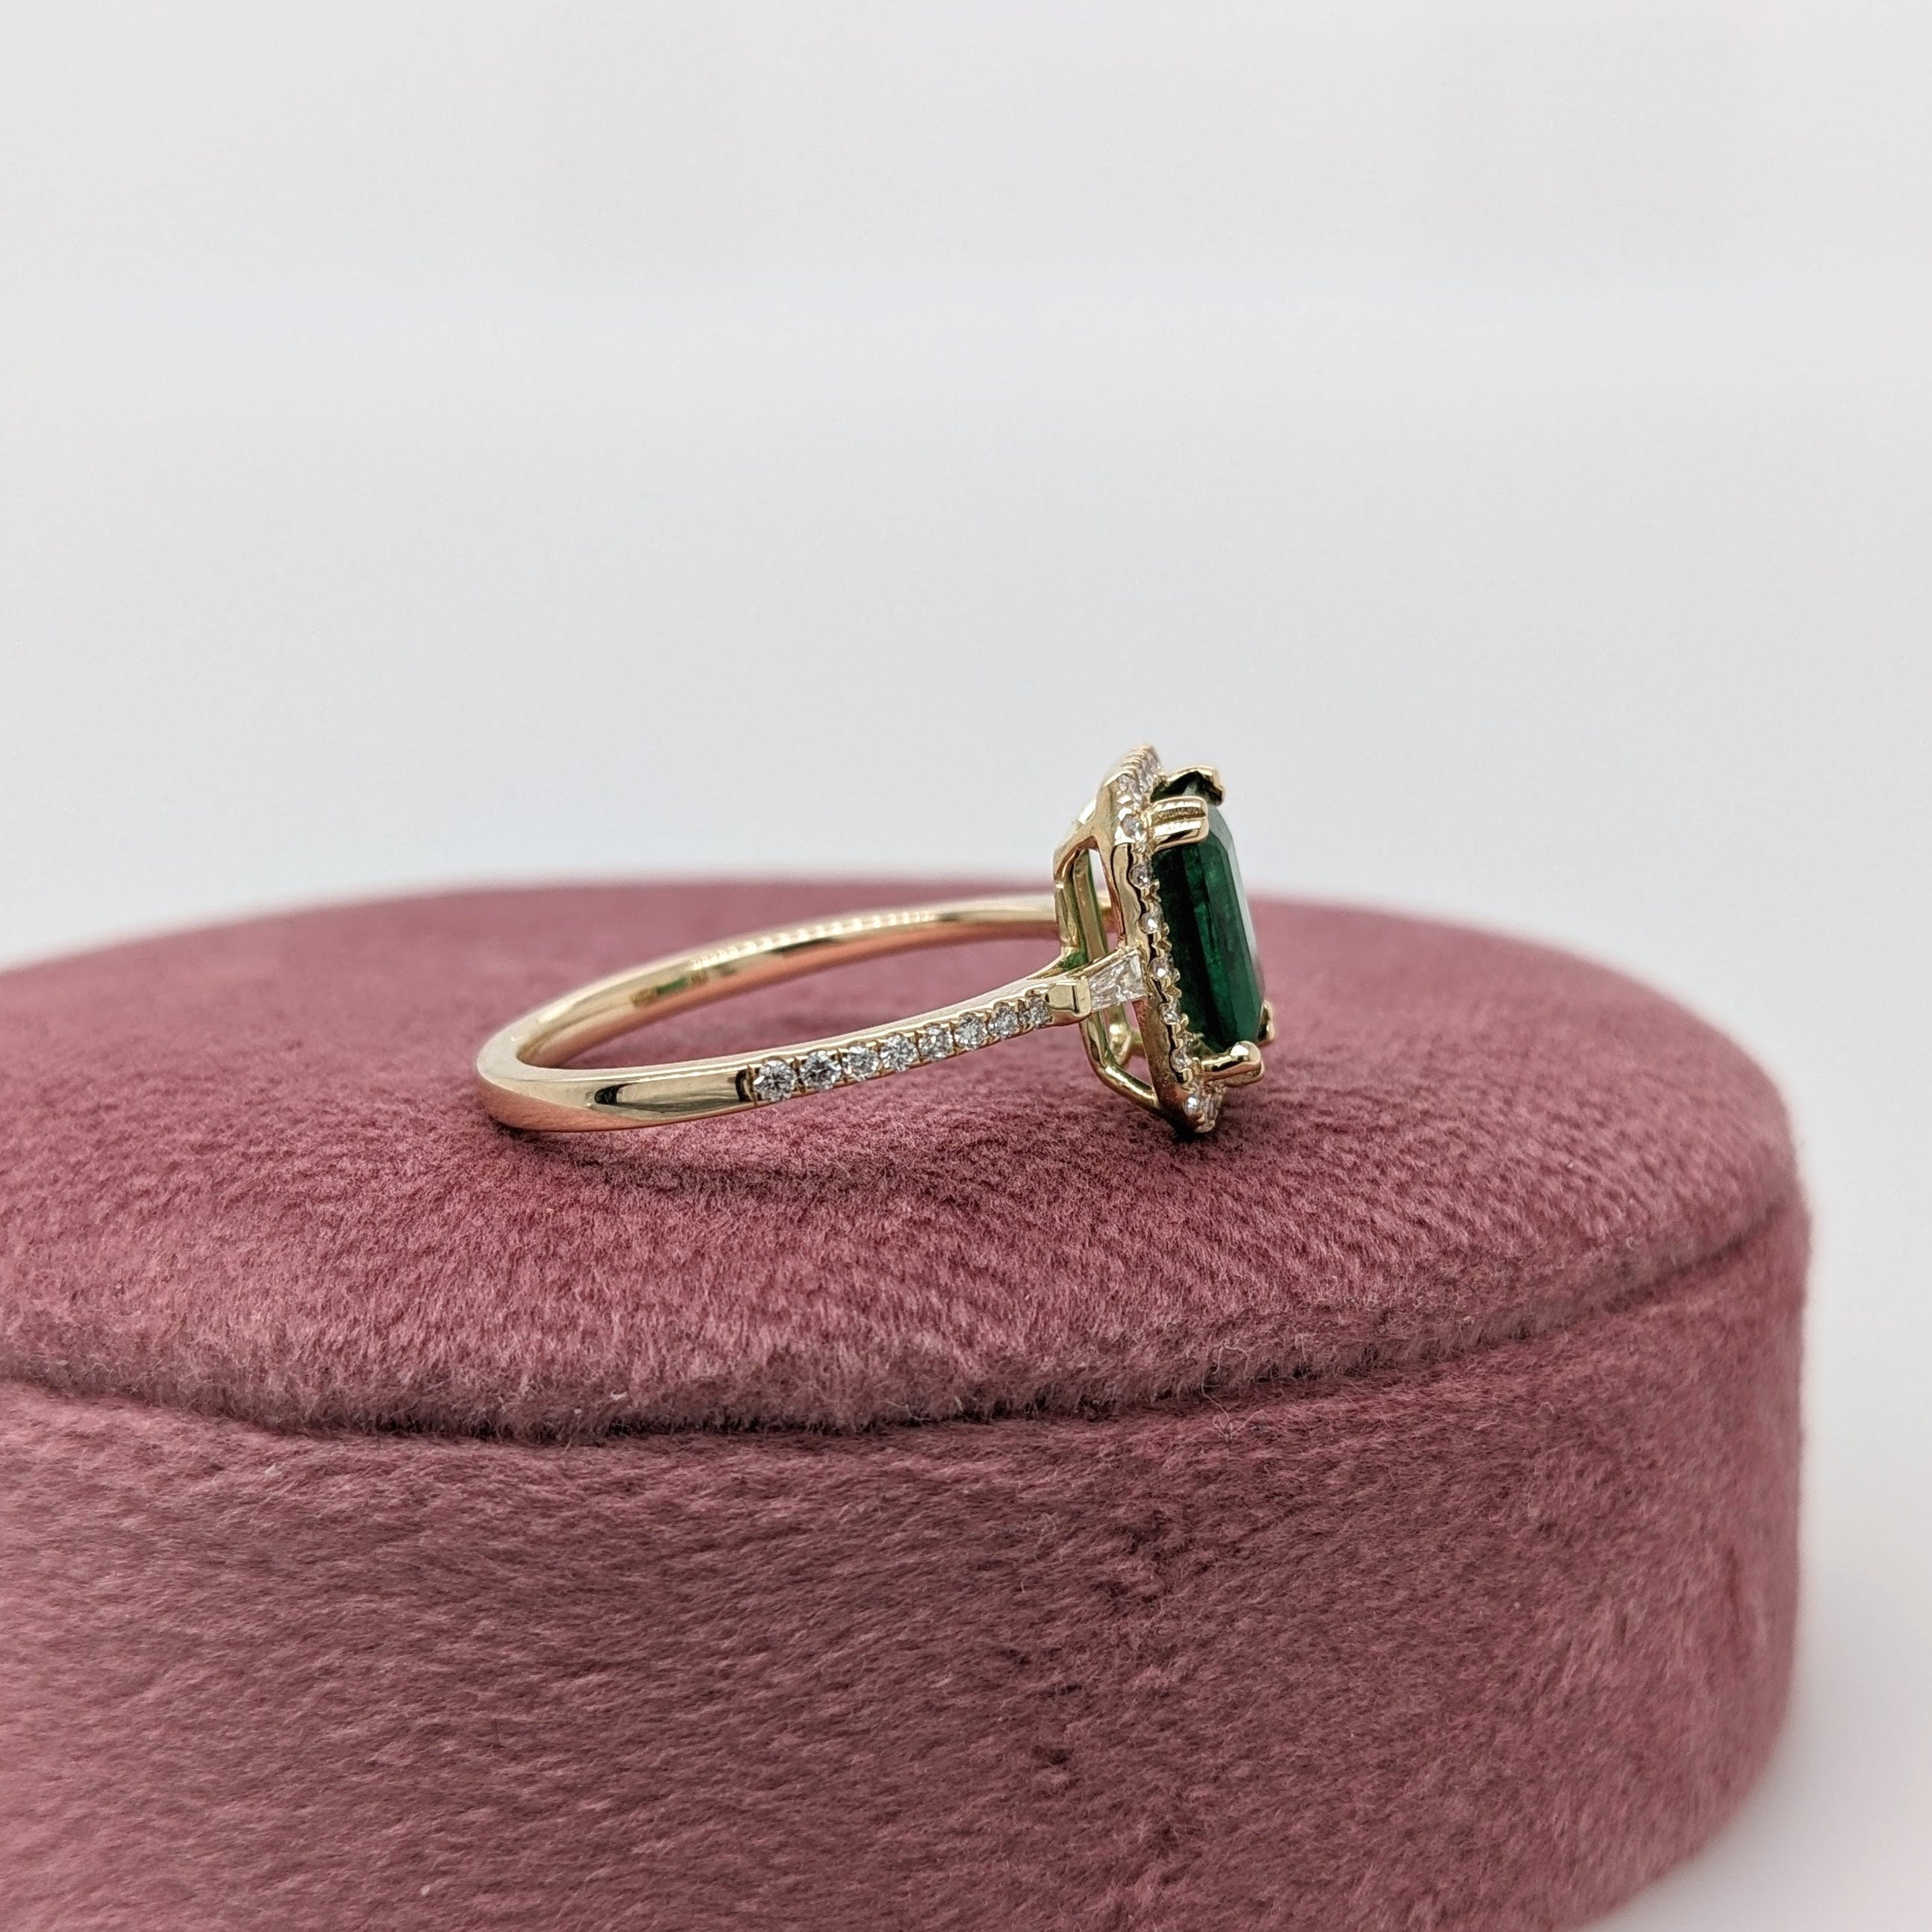 Dainty Emerald Ring in 14K Yellow Gold w a Natural Diamond Halo | Emerald Cut 8x6mm | May Birthstone | Daily Wear | Green Gemstone Ring